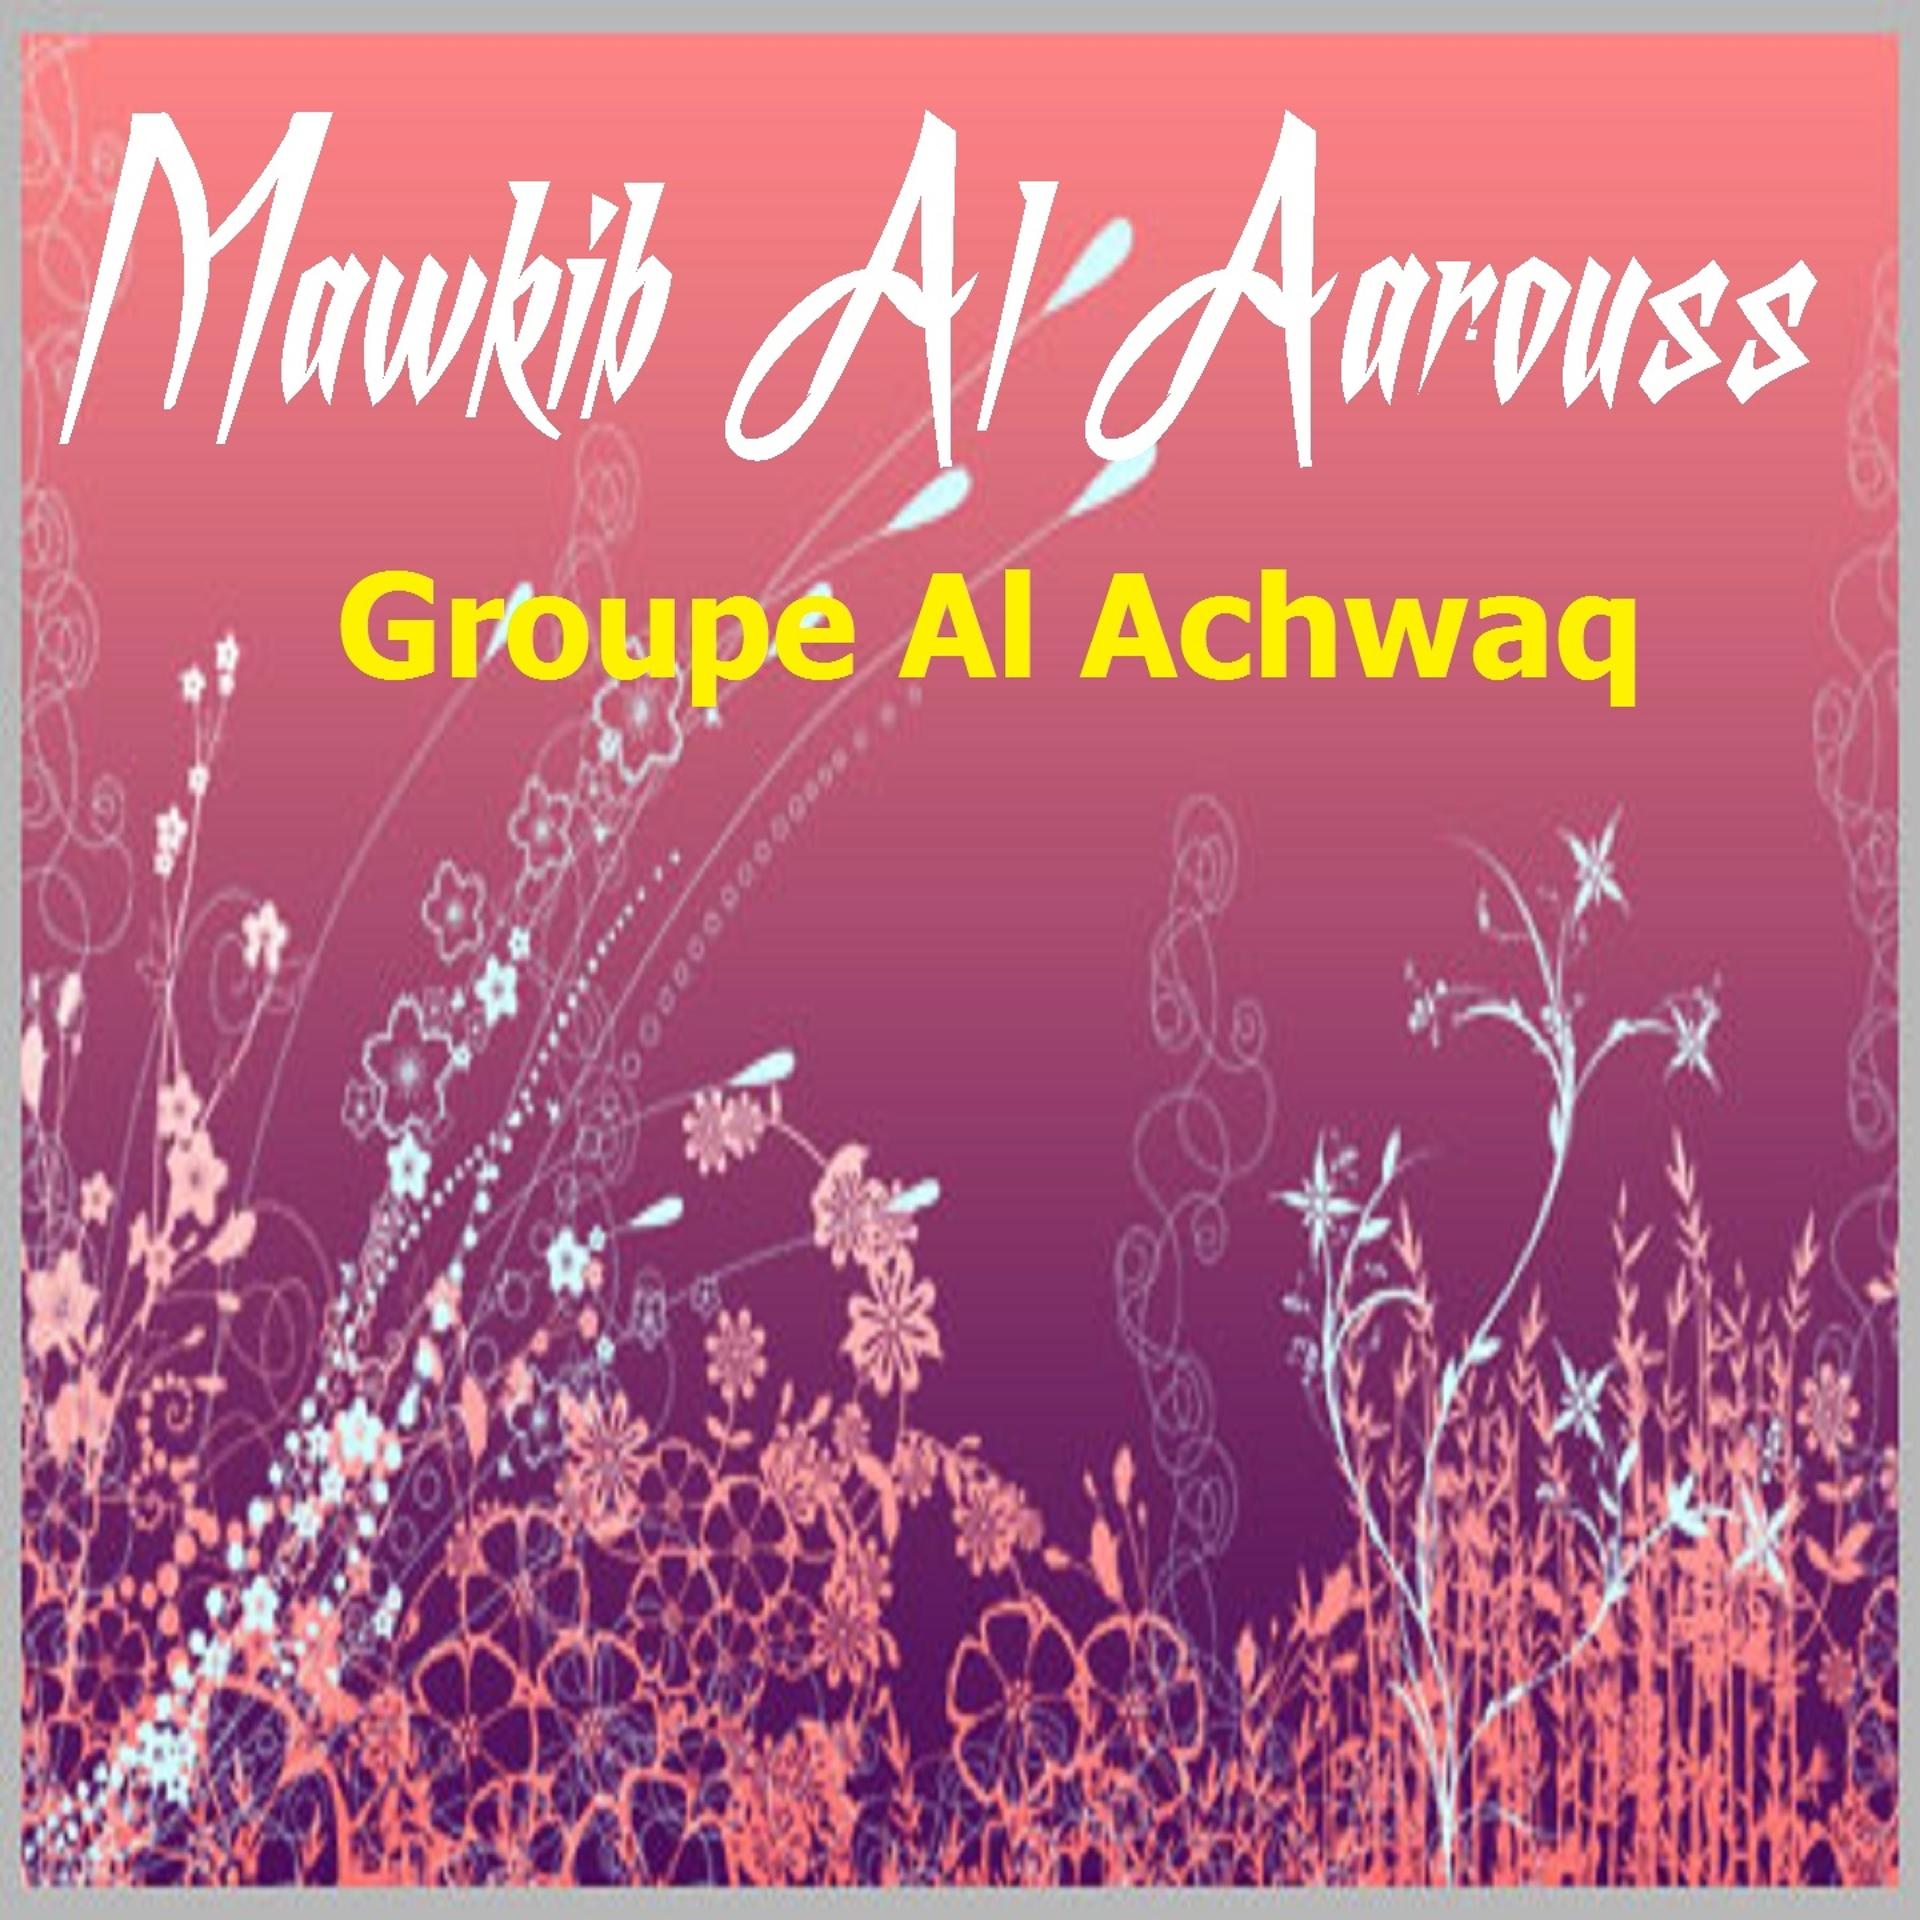 Постер альбома Mawkib Al Aarouss